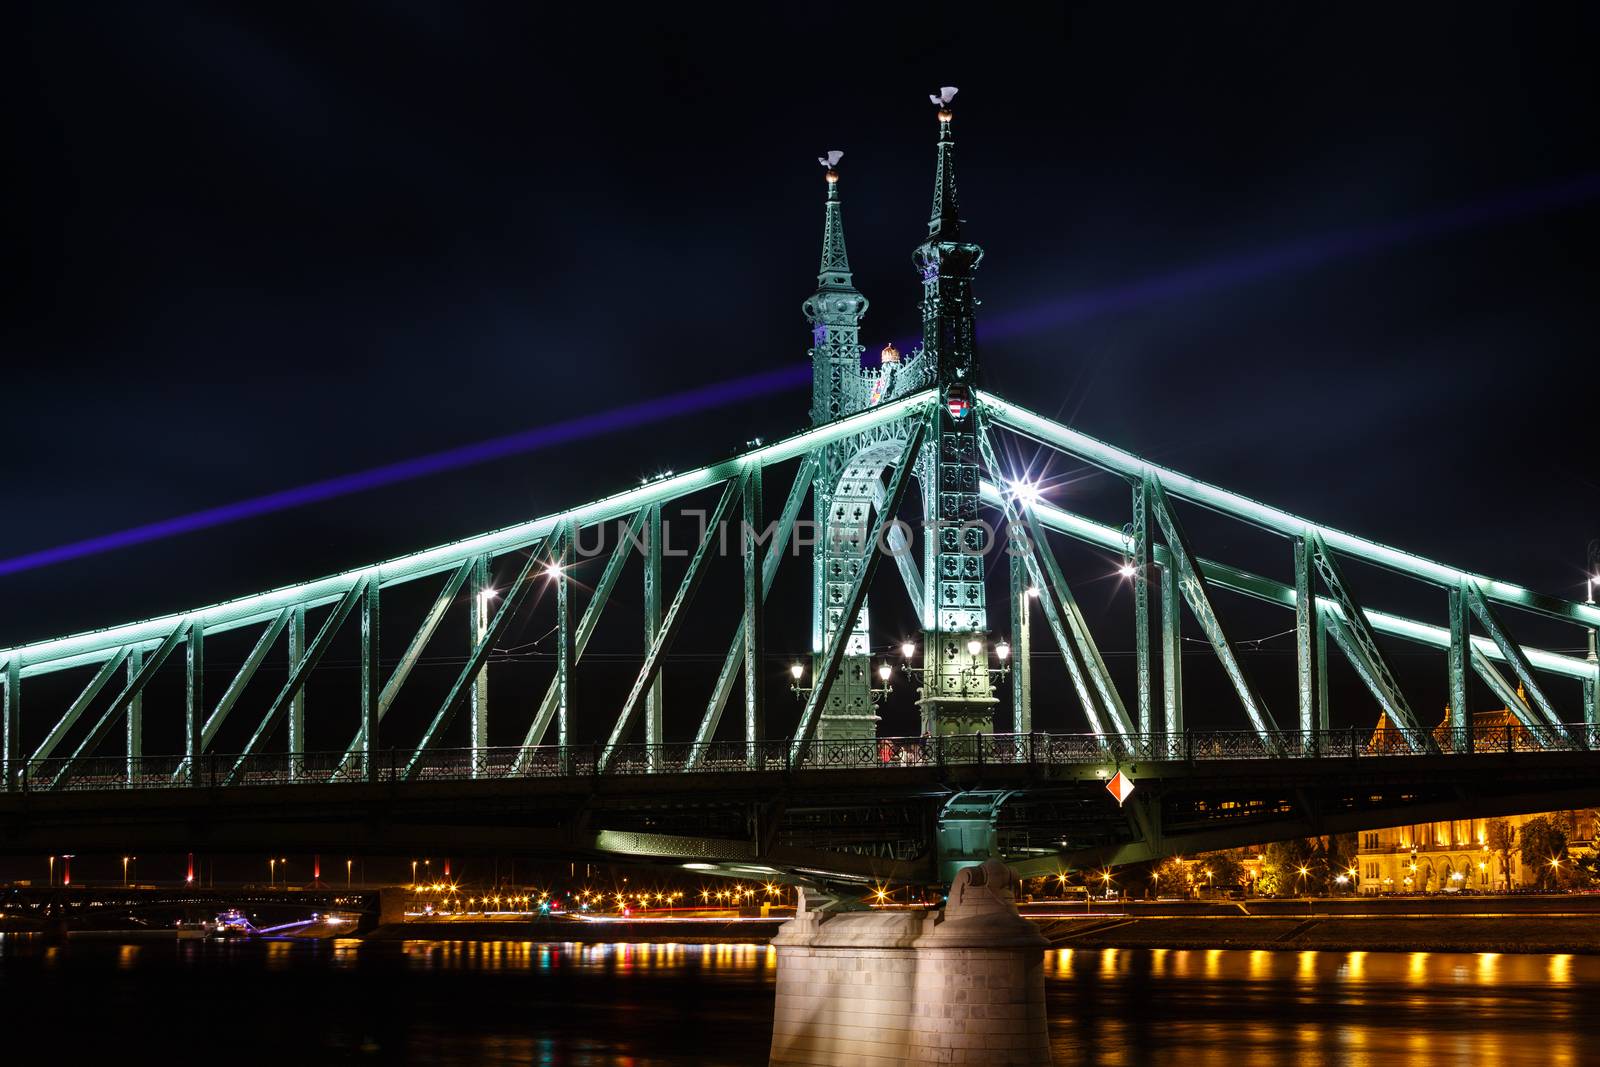  The Freedem bridge in Budapest by Roka